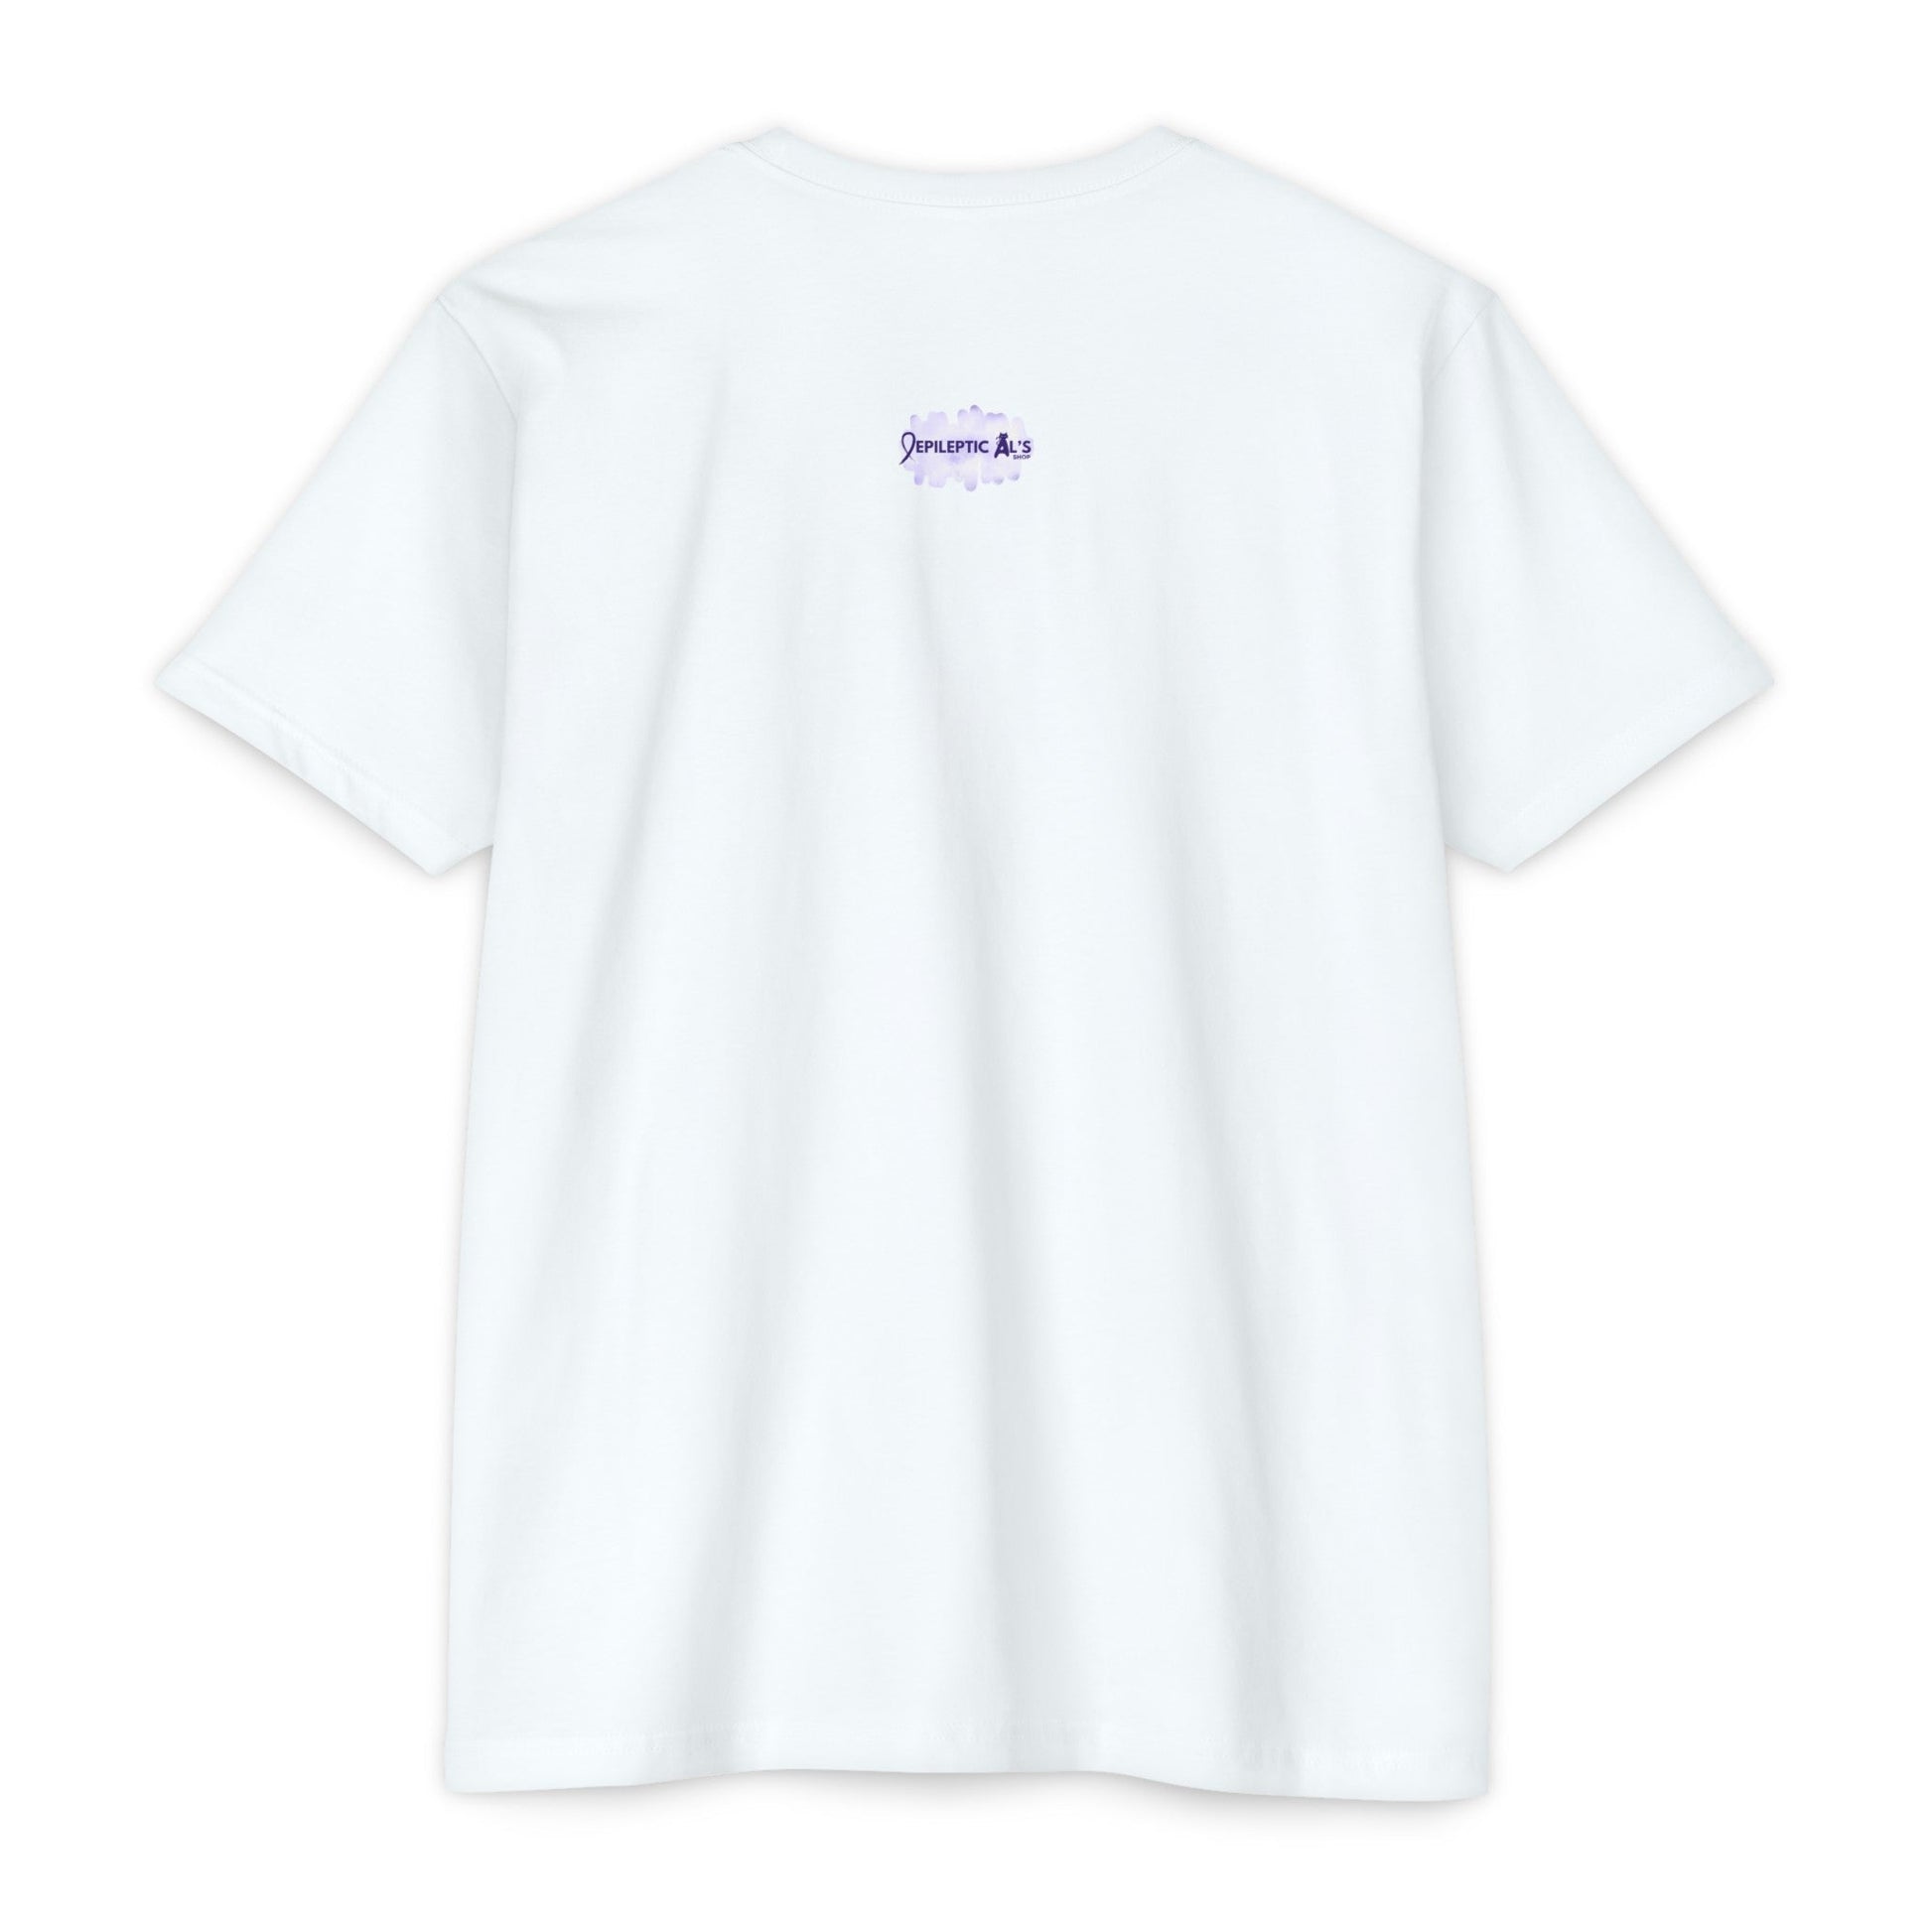 Indiana Cats Unisex CVC Jersey T - shirt - T - Shirt - Epileptic Al’s Shop